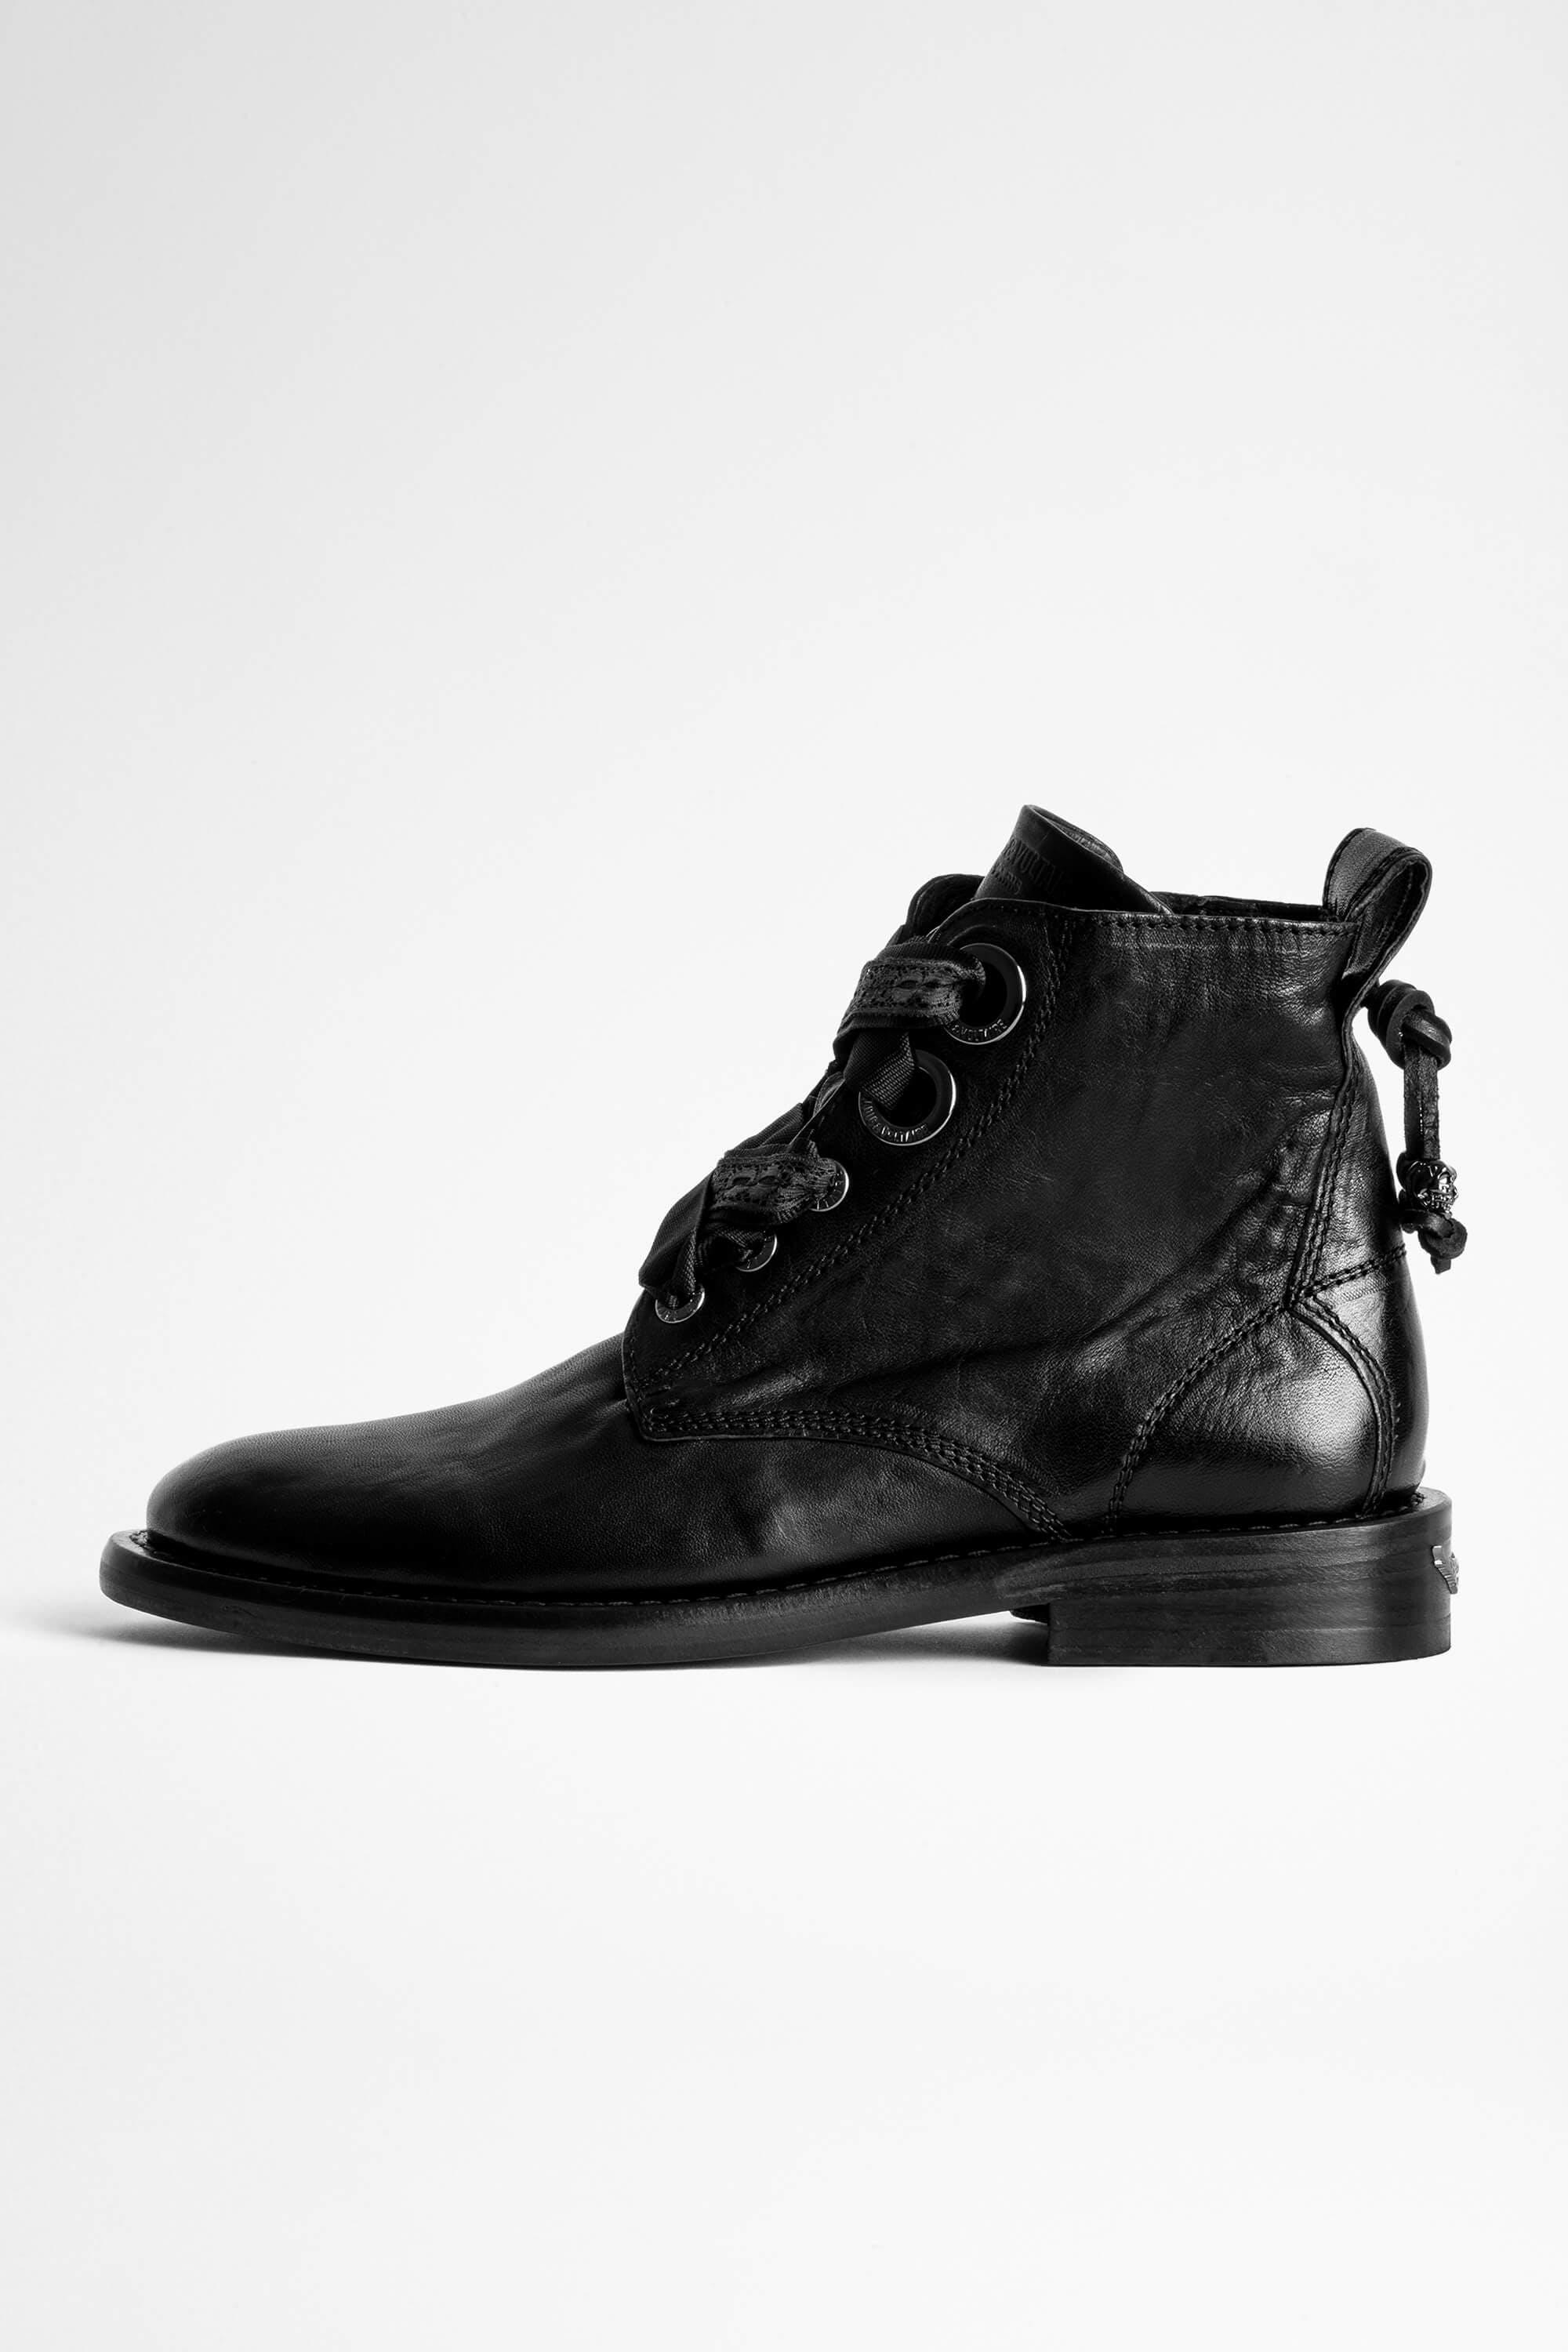 Zadig & Voltaire Laureen Roma Boots in Black | Lyst